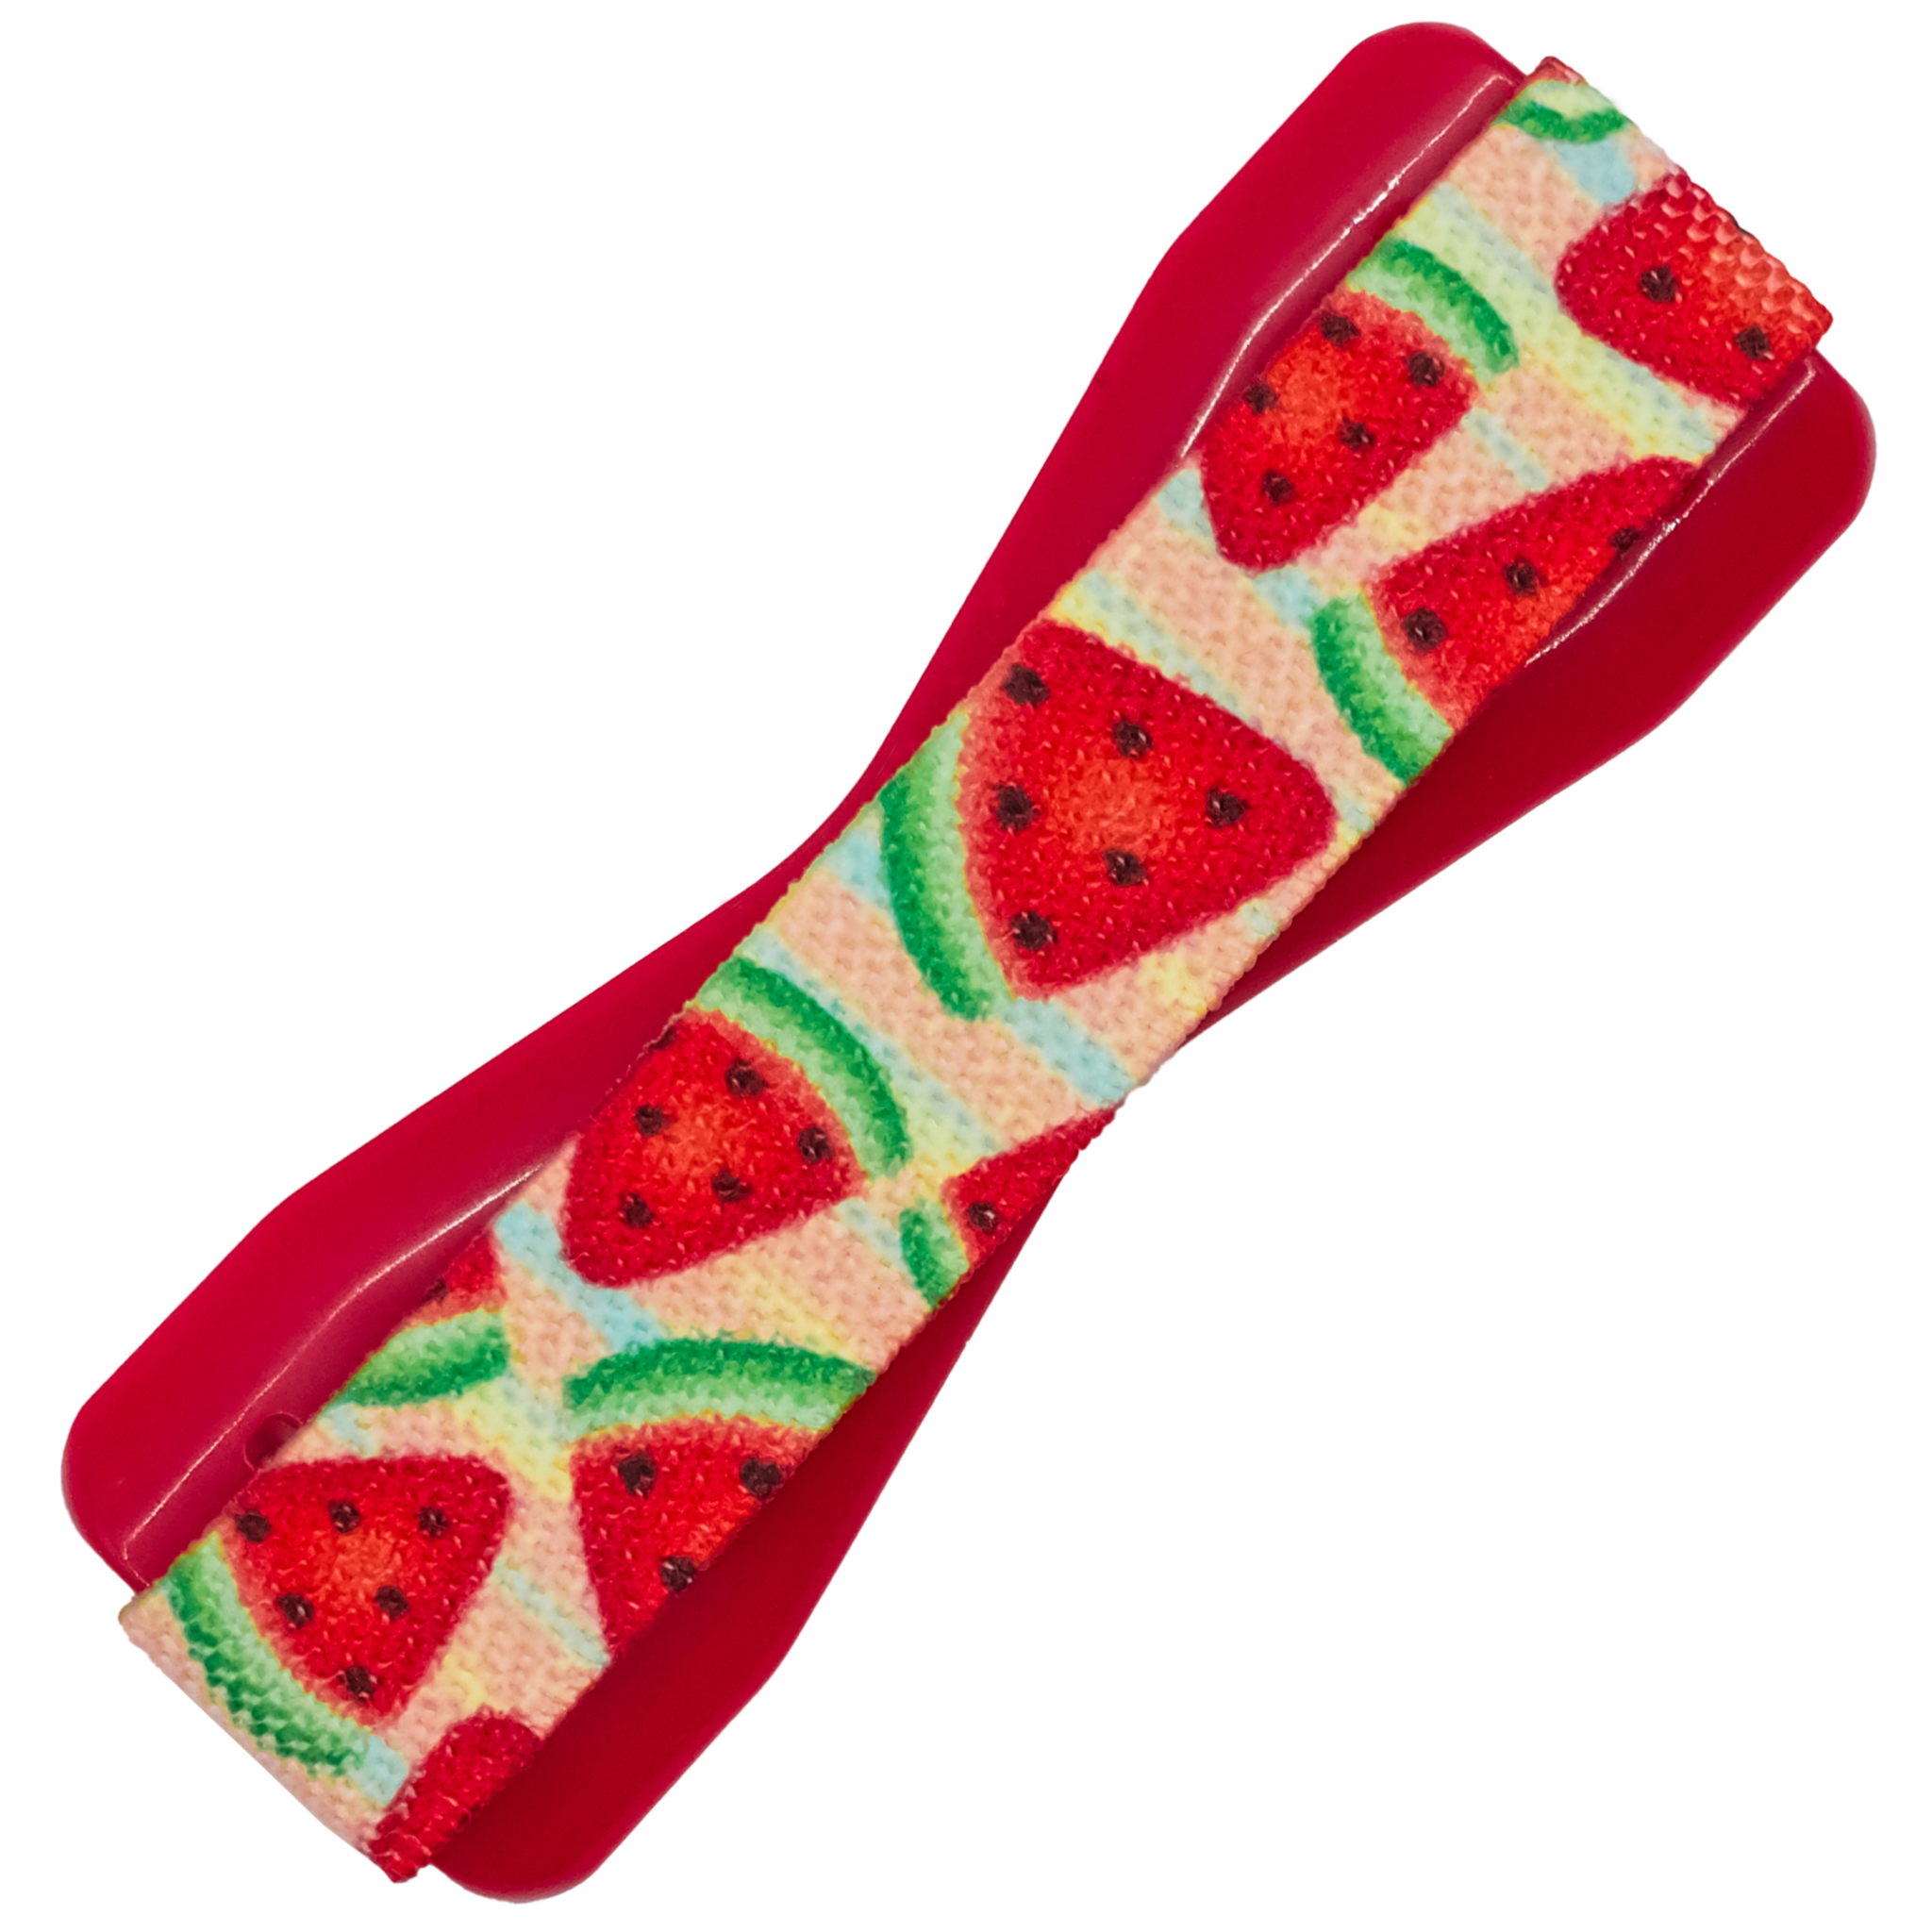 Original - Watermelon Slice